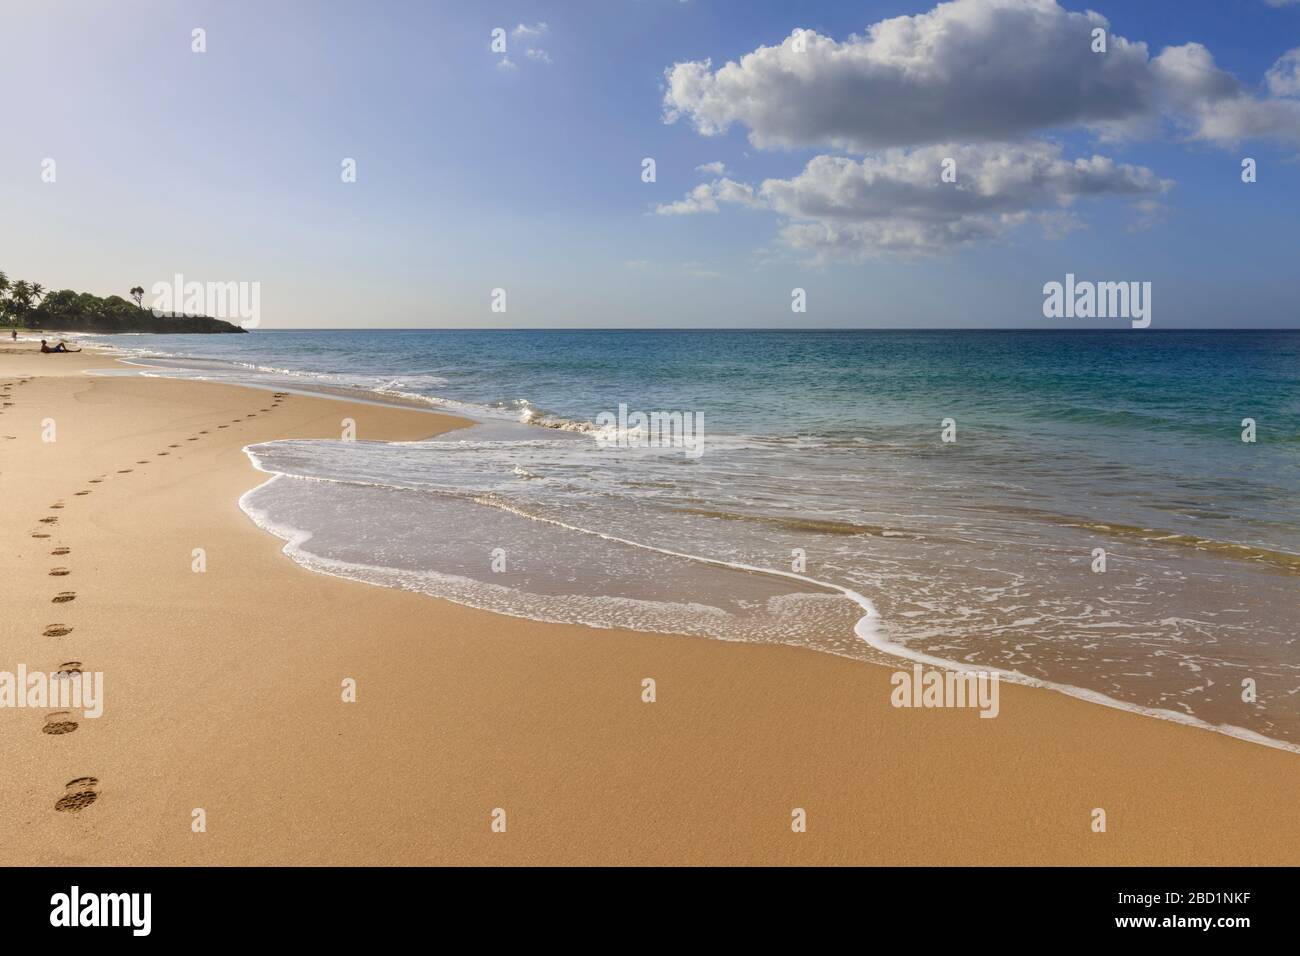 Tropical Anse de la Perle beach, sunbather, golden sand, footprints, Death In Paradise location, Deshaies, Guadeloupe, Leeward Islands, Caribbean Stock Photo